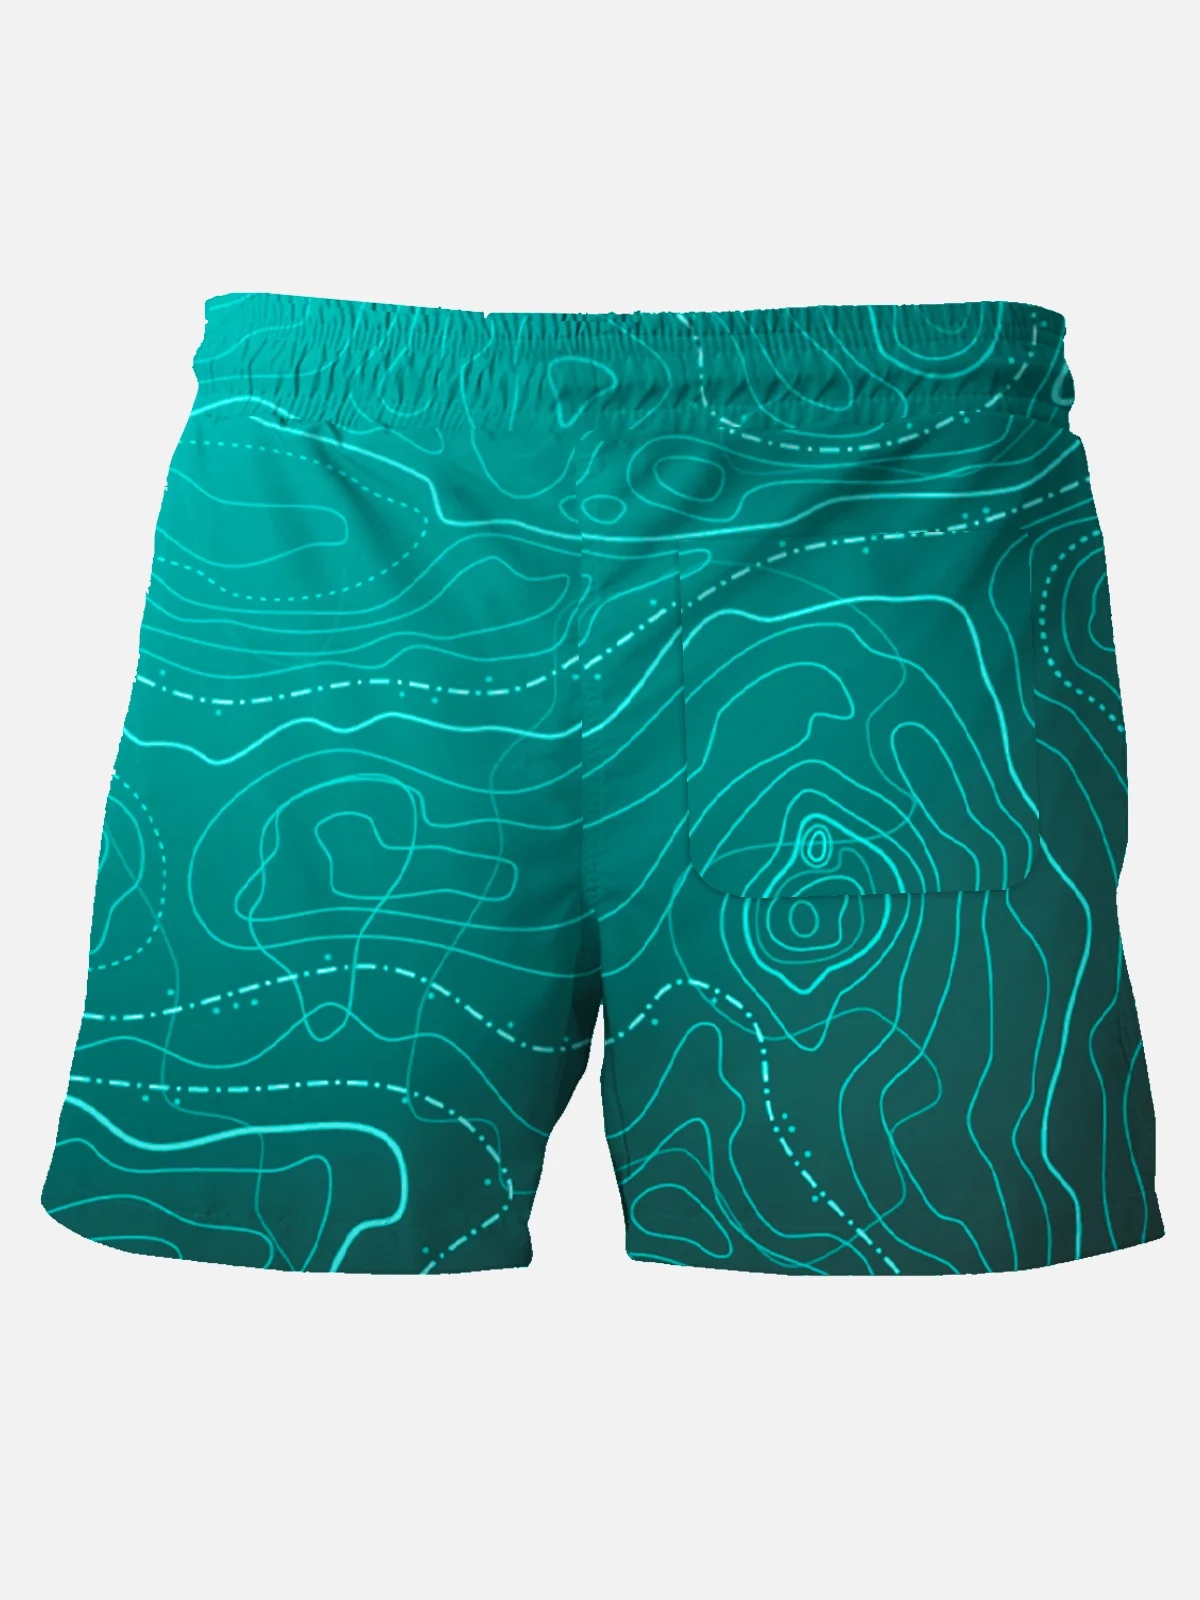 Royaura Vacation Beach Map Line Tie-Dye Men's Hawaii Art Breathable quick Dry Casual Shorts Swim Trunks